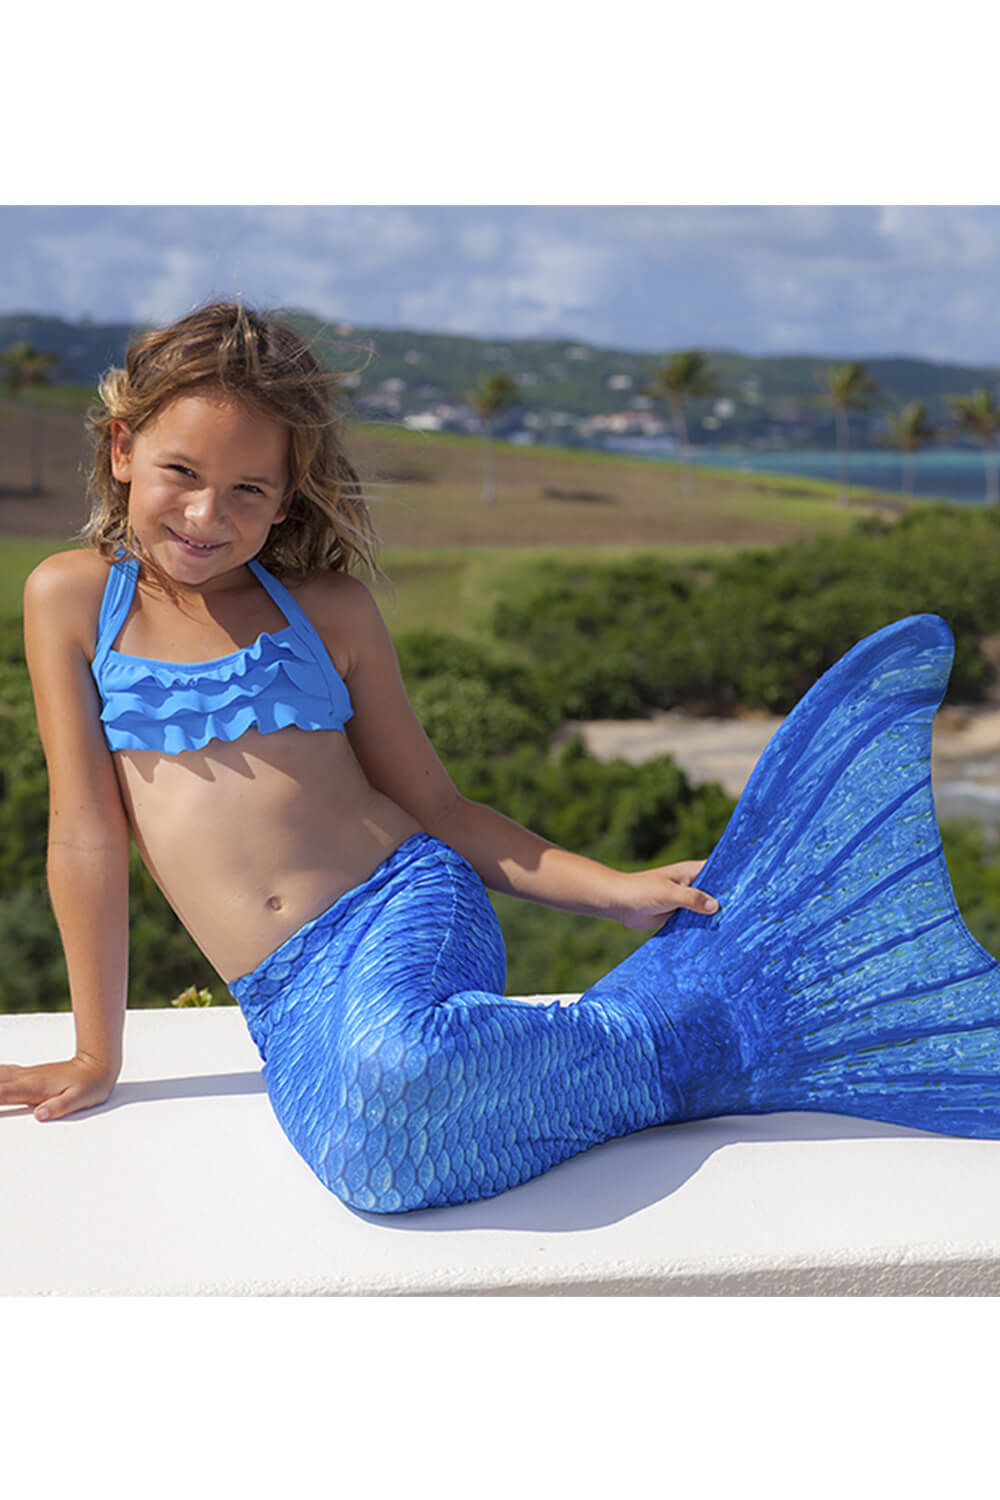 Blue Mermaid Tail For Kids Adults Fin Fun Mermaid 3